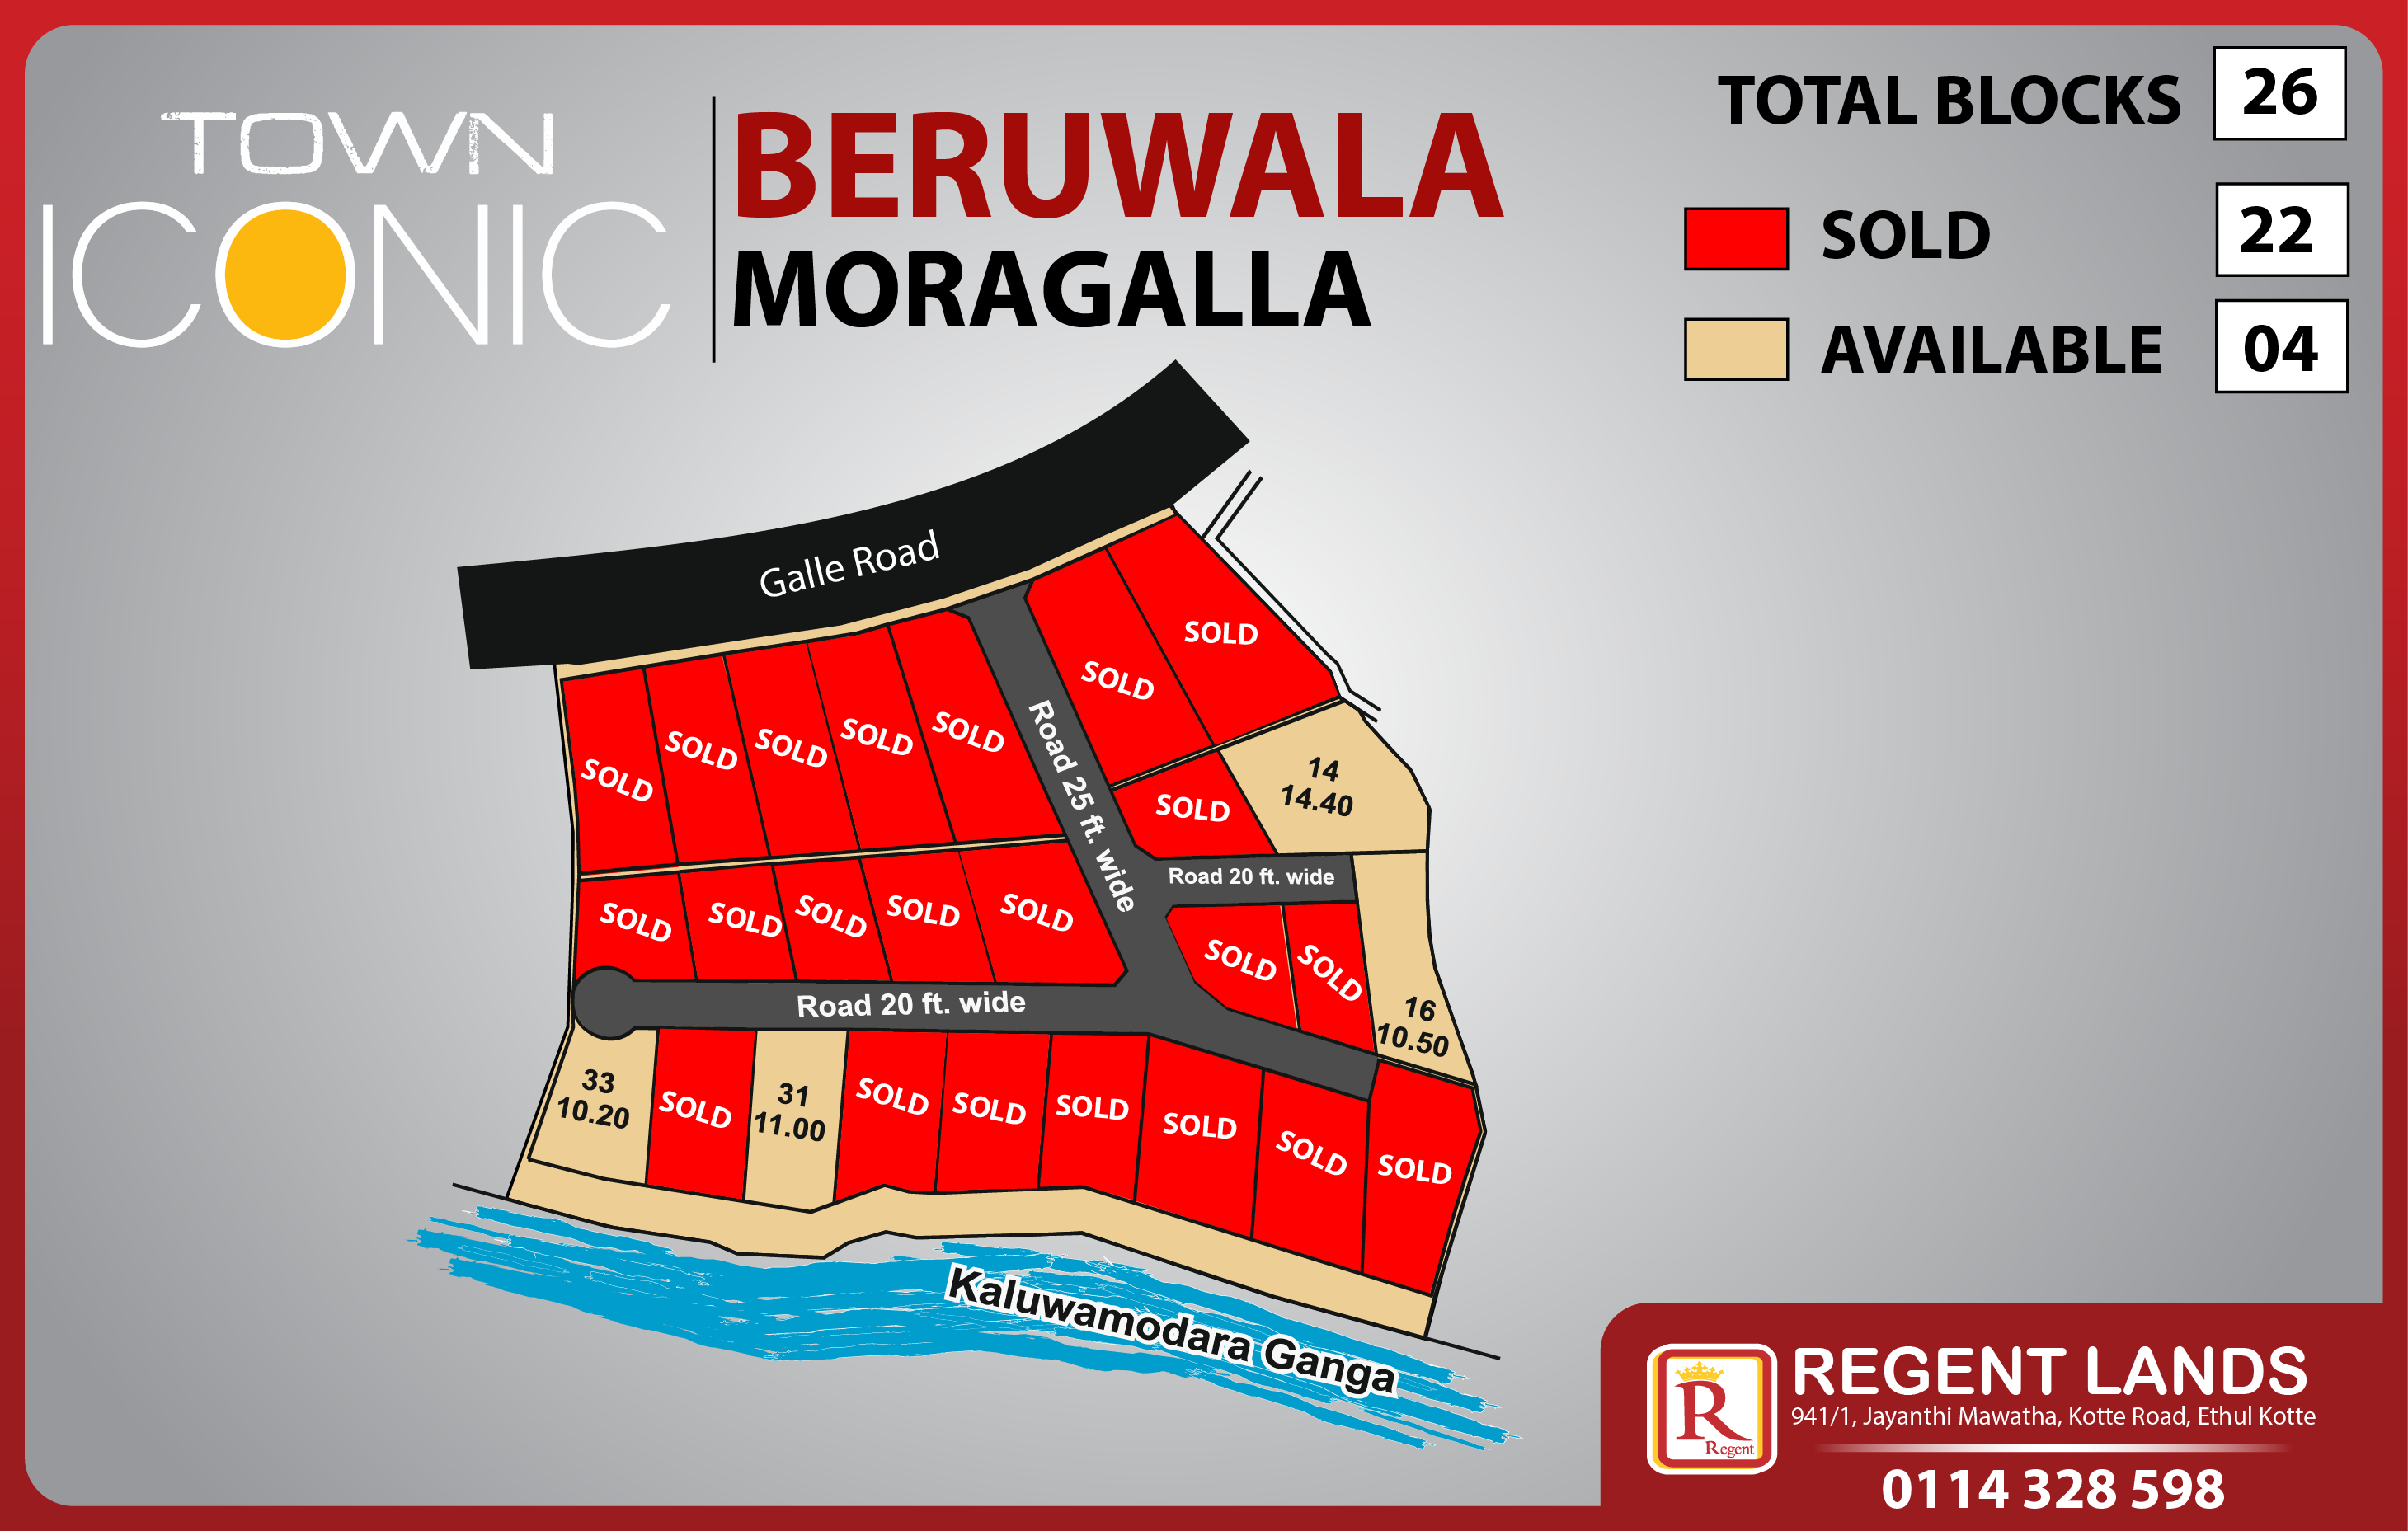 Beruwala – Town Iconic